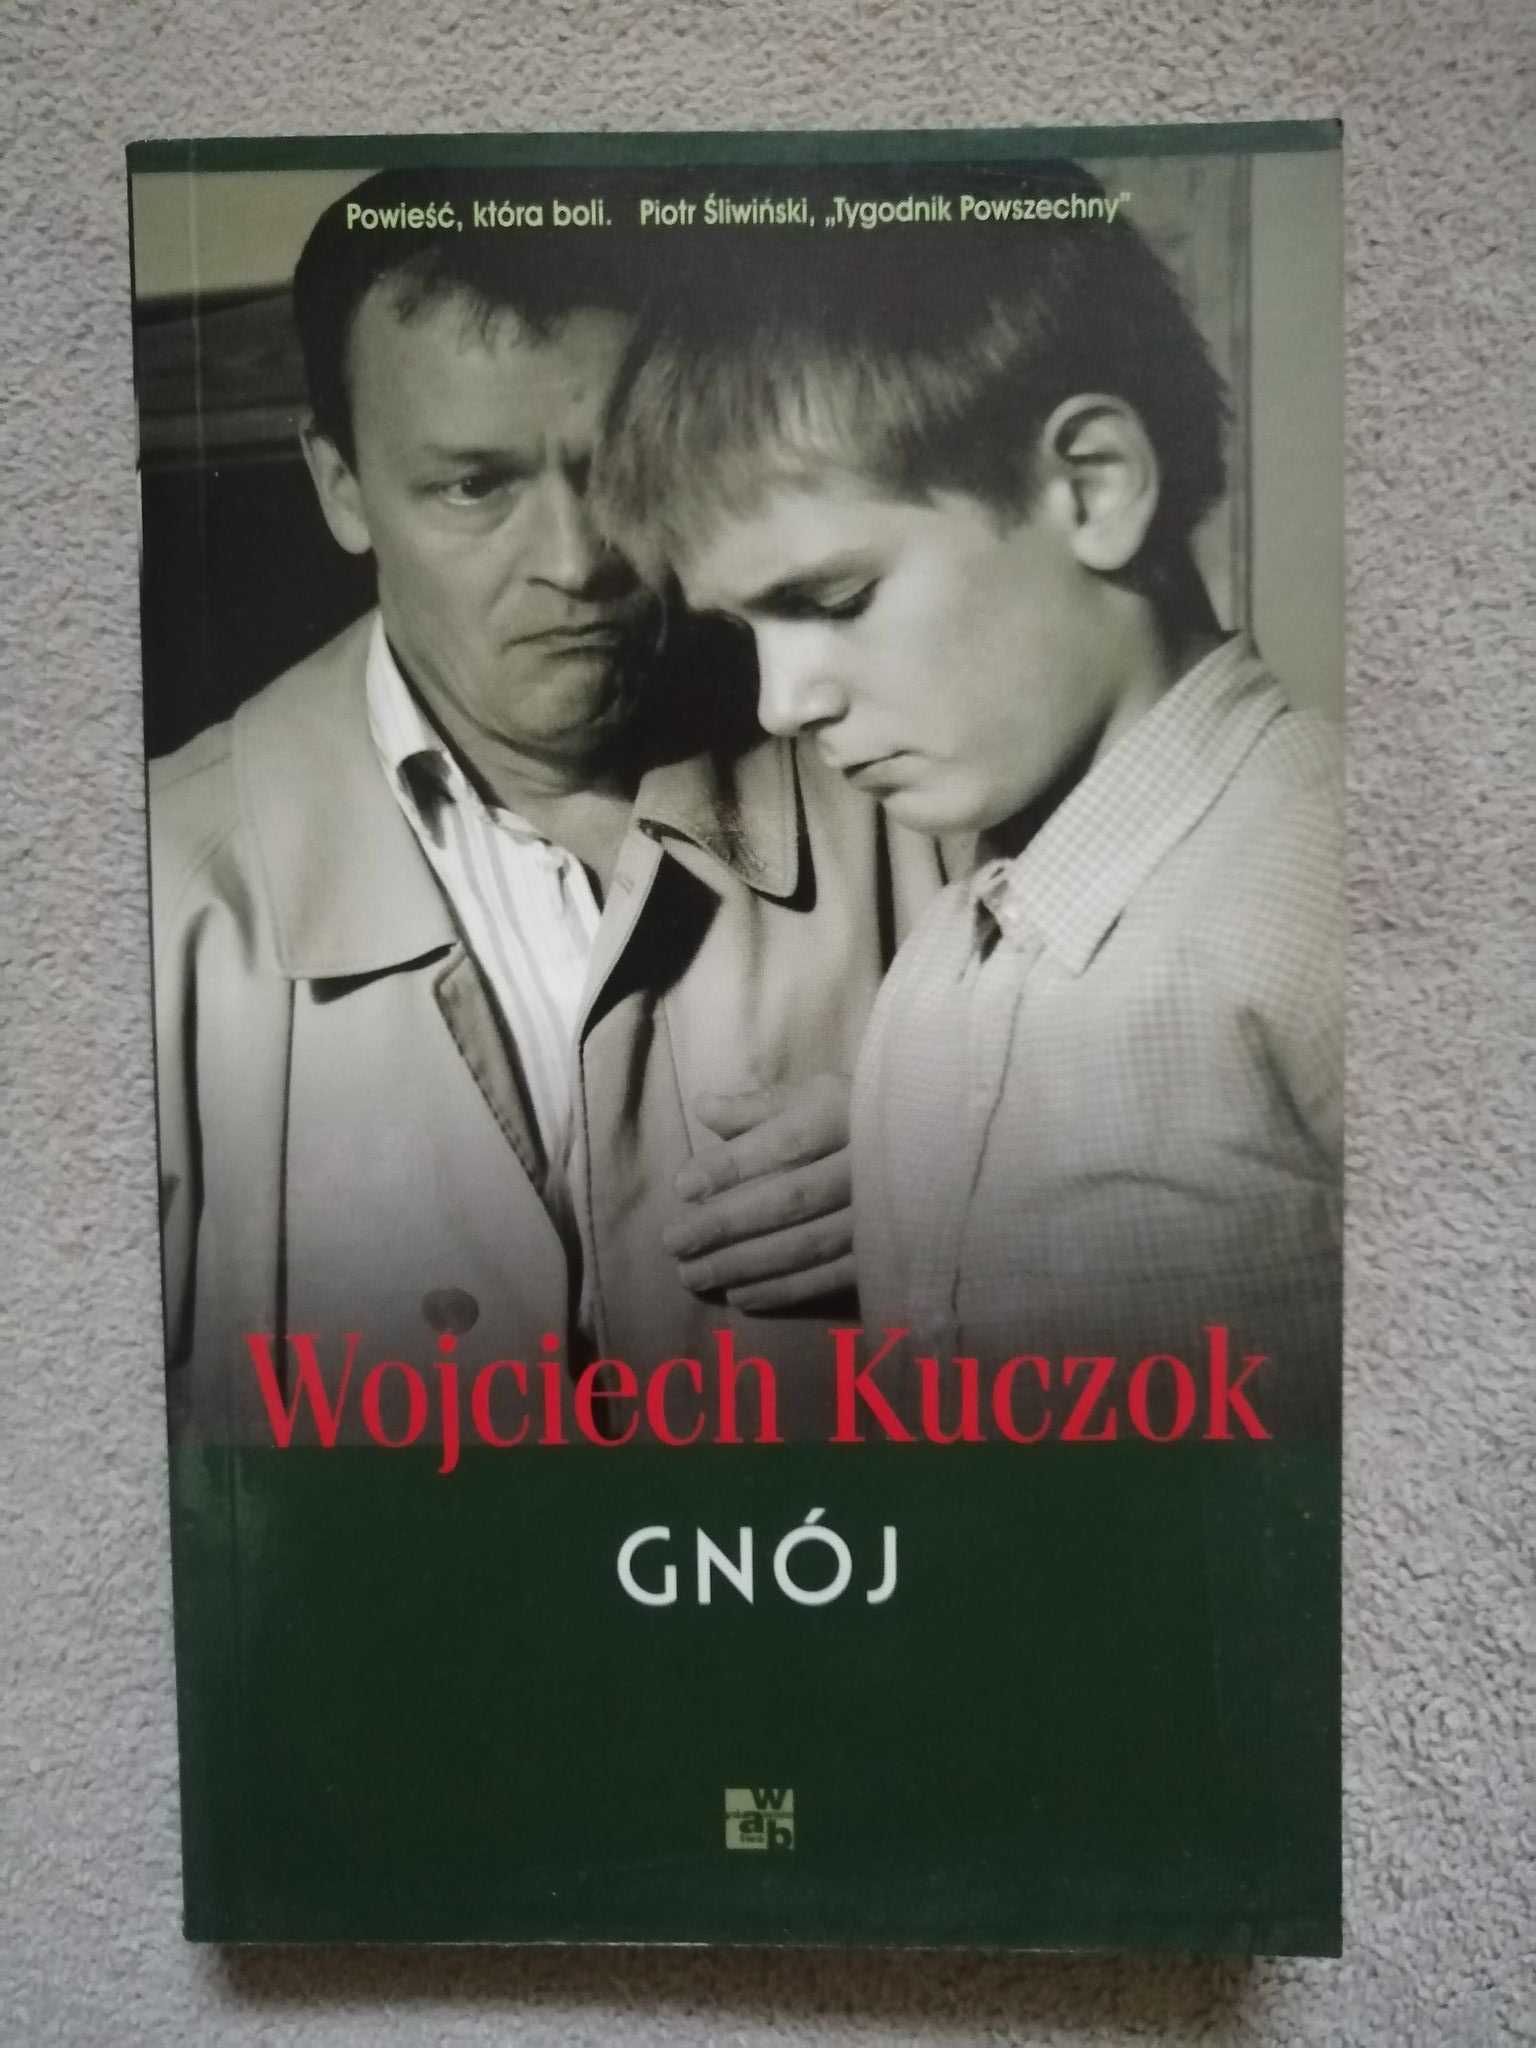 Gnój (Wojciech Kuczok)